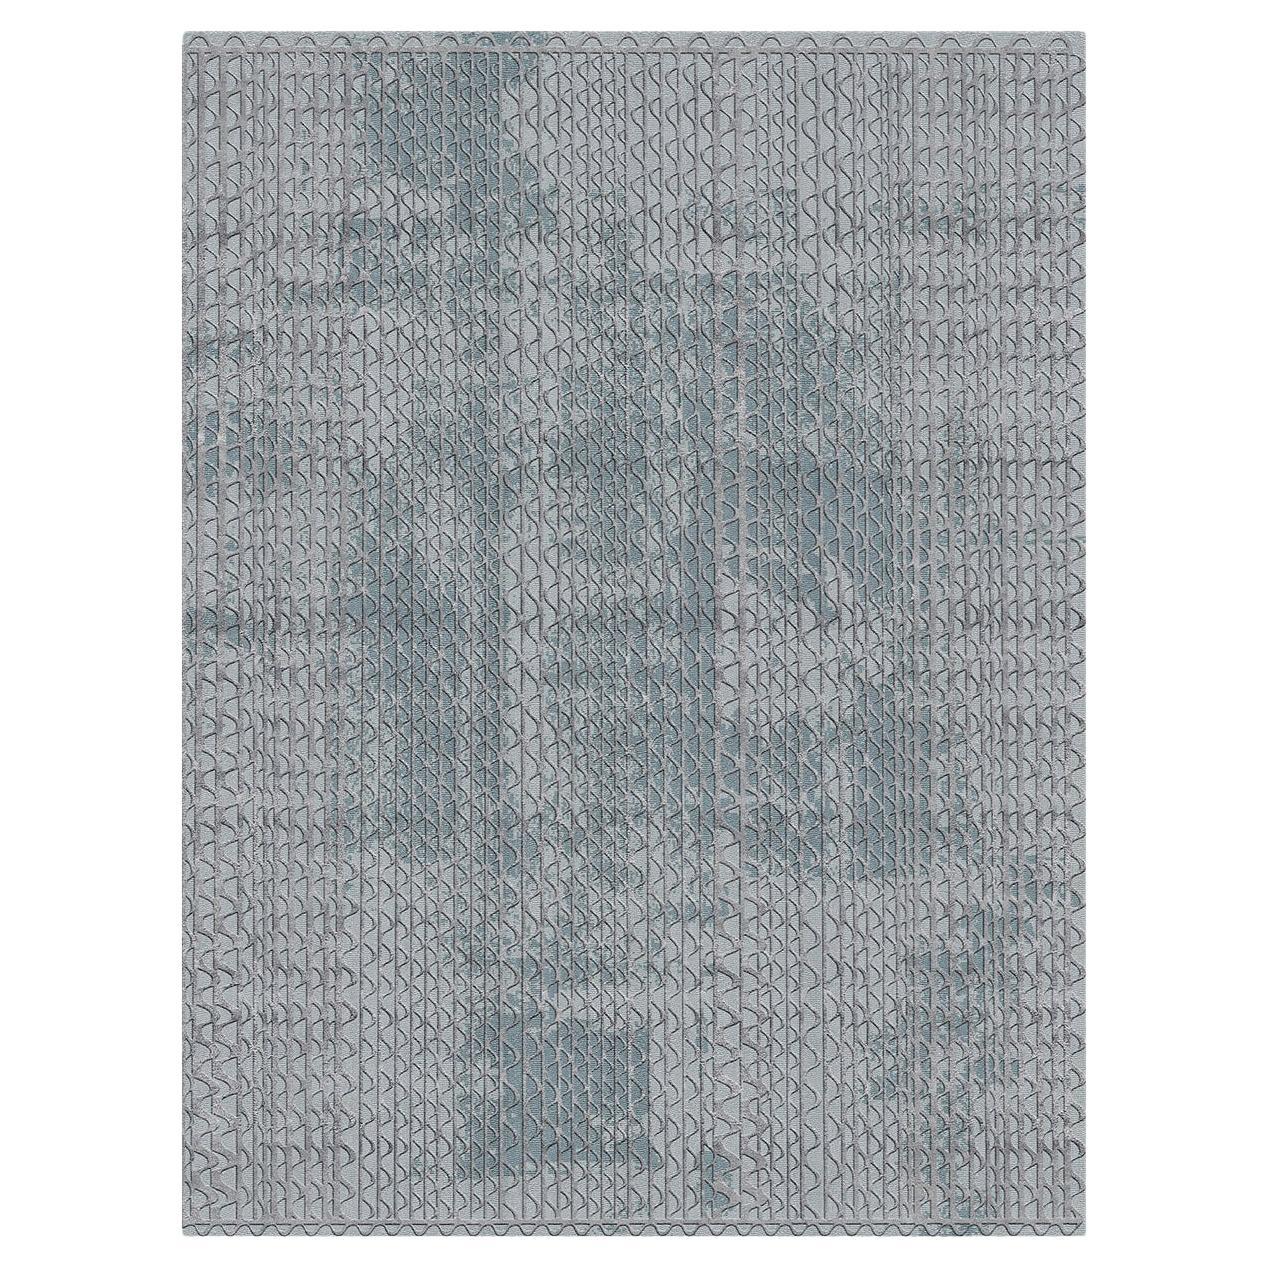 Triple Waves Rectangular Gray Rug by Lorenza Bozzoli  For Sale